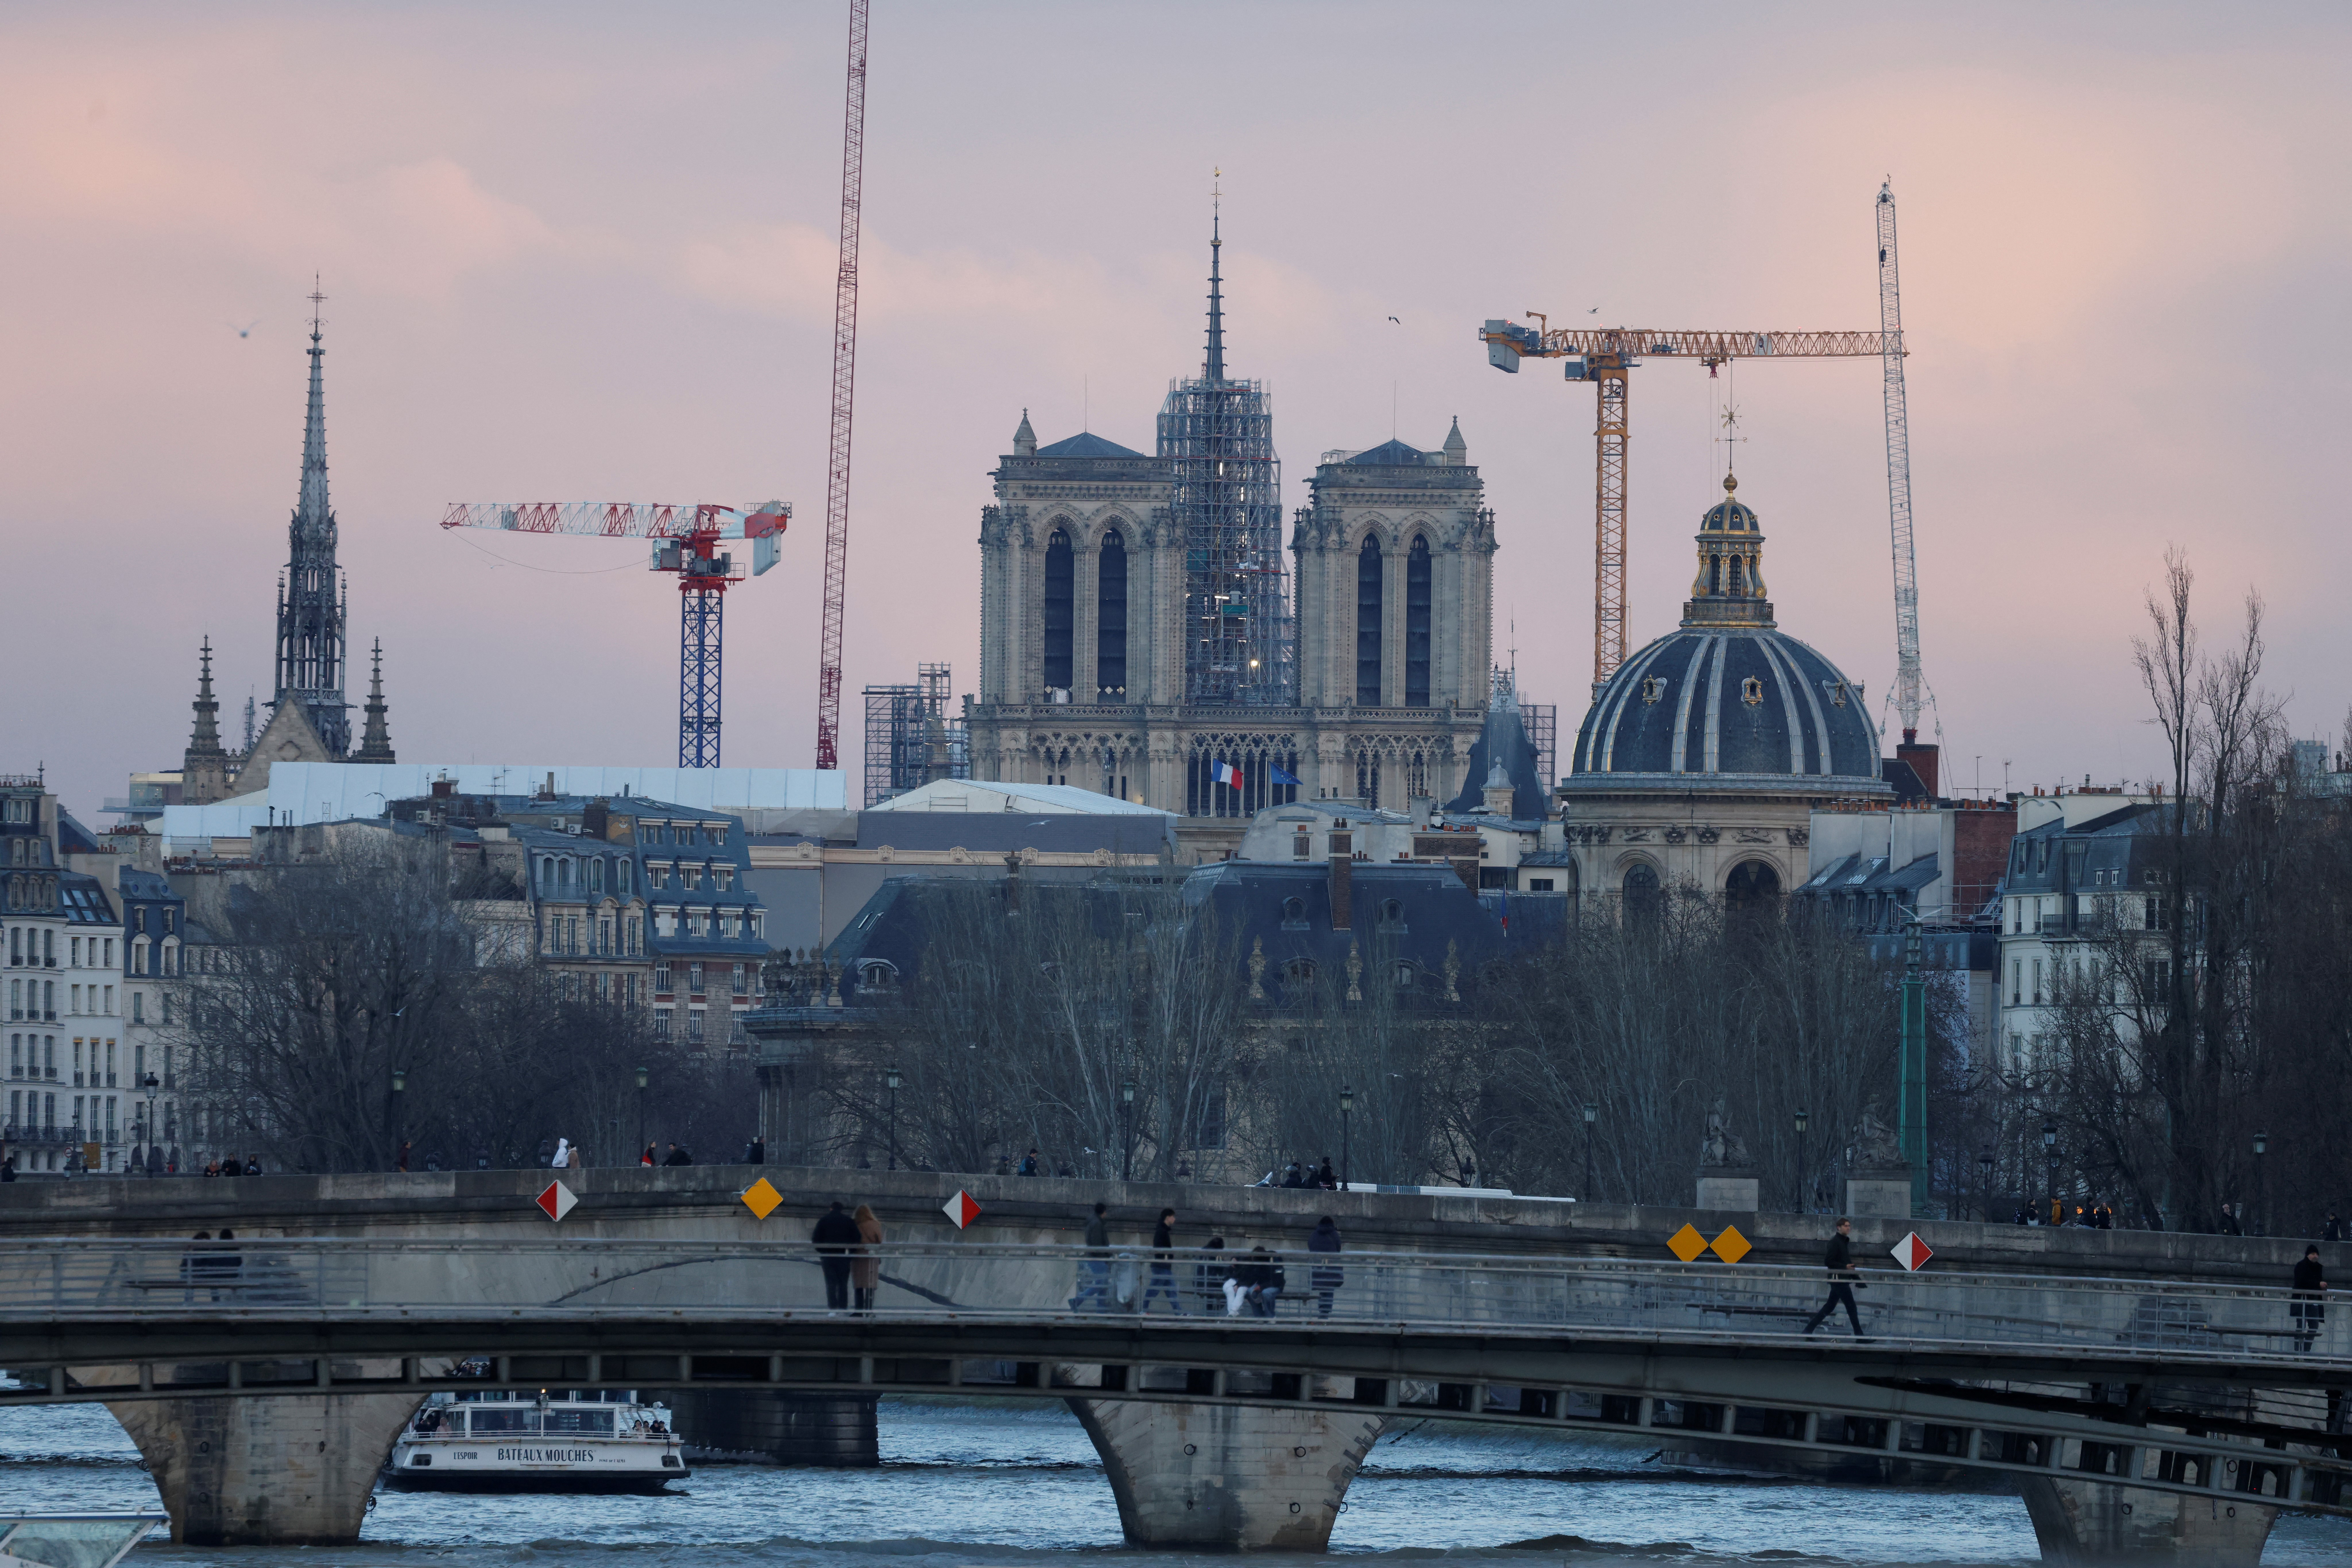 "Notre Dame"